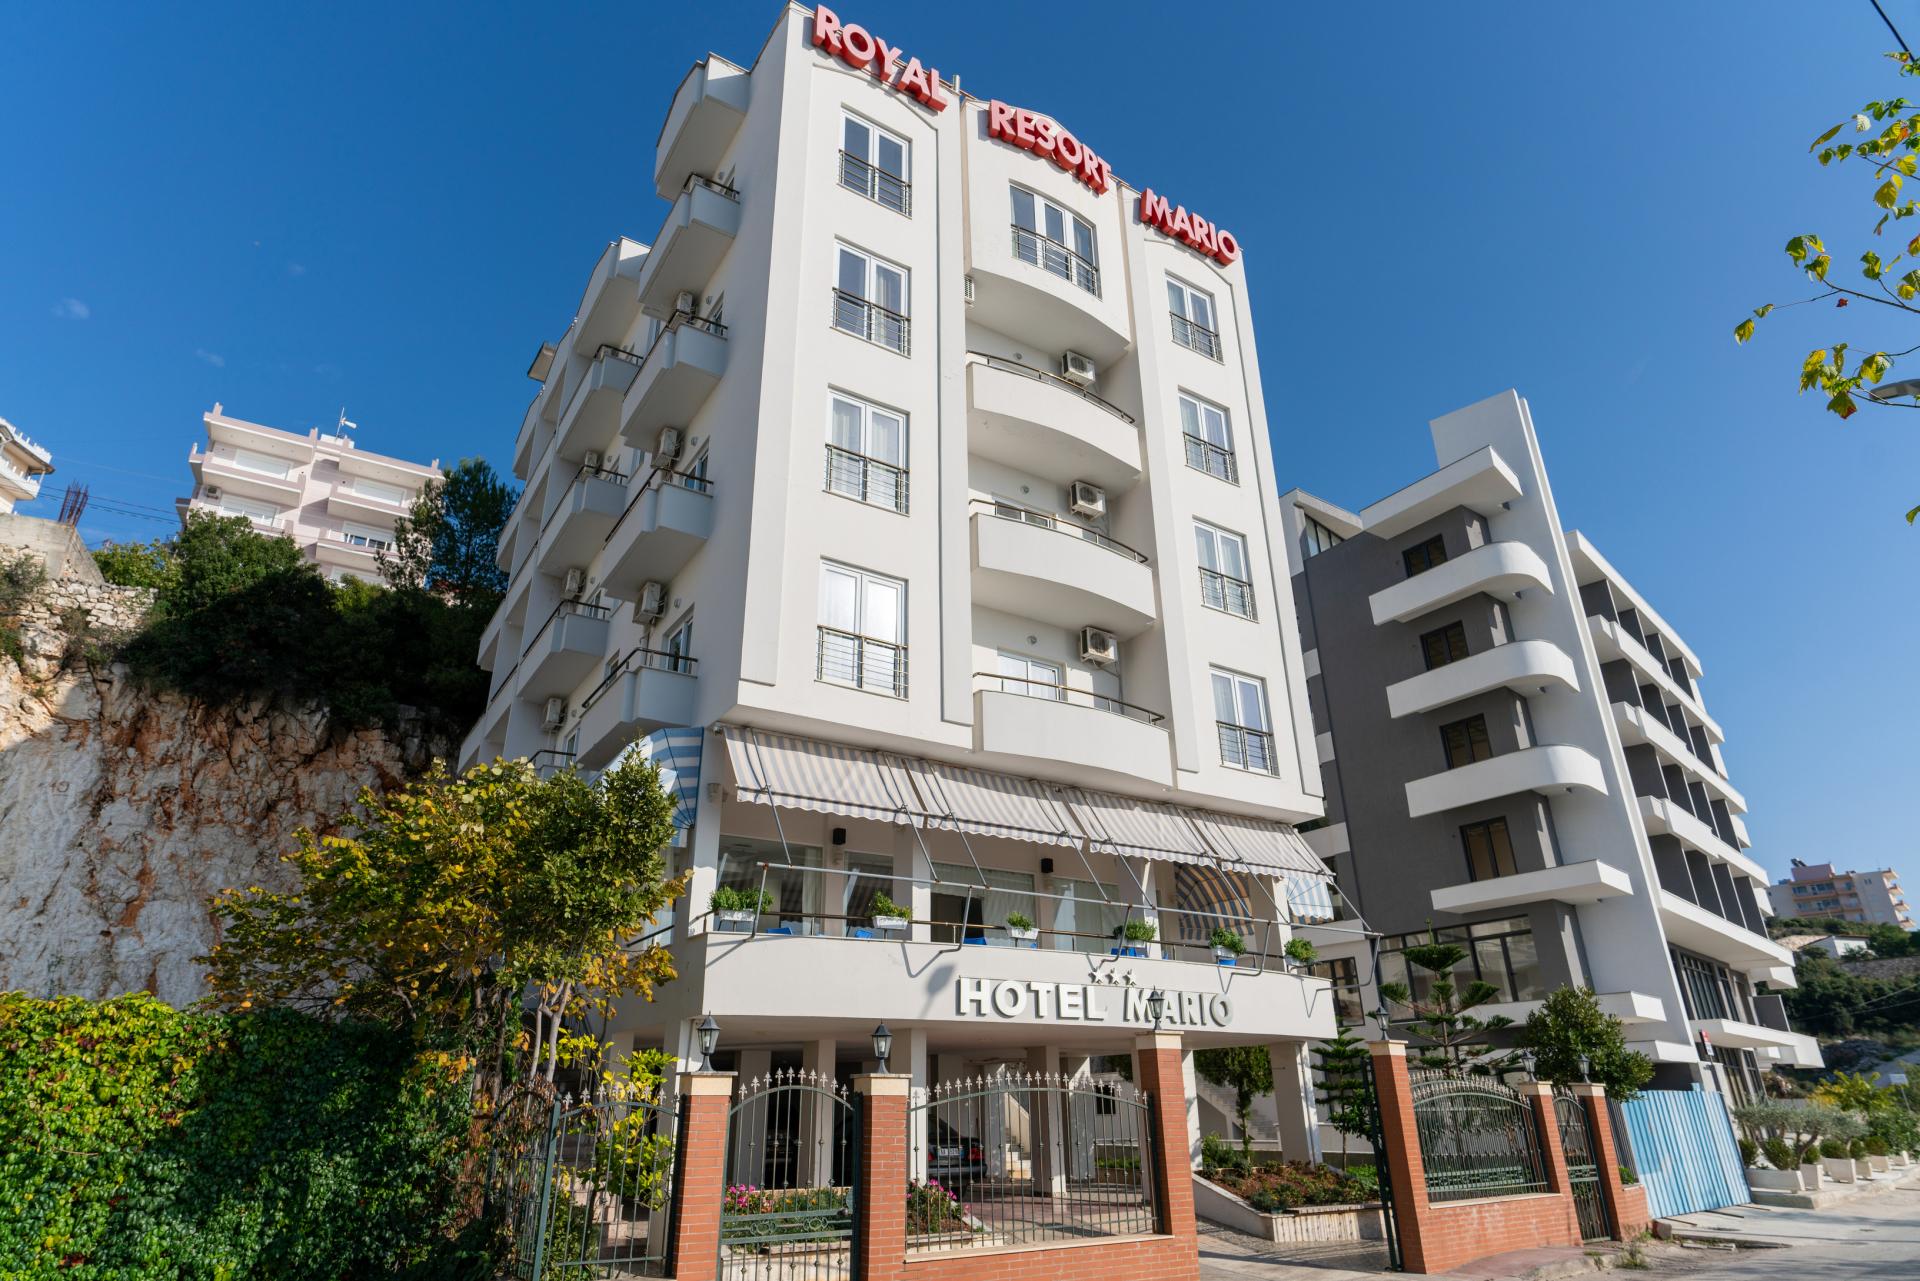 Hotel Mario - Albania